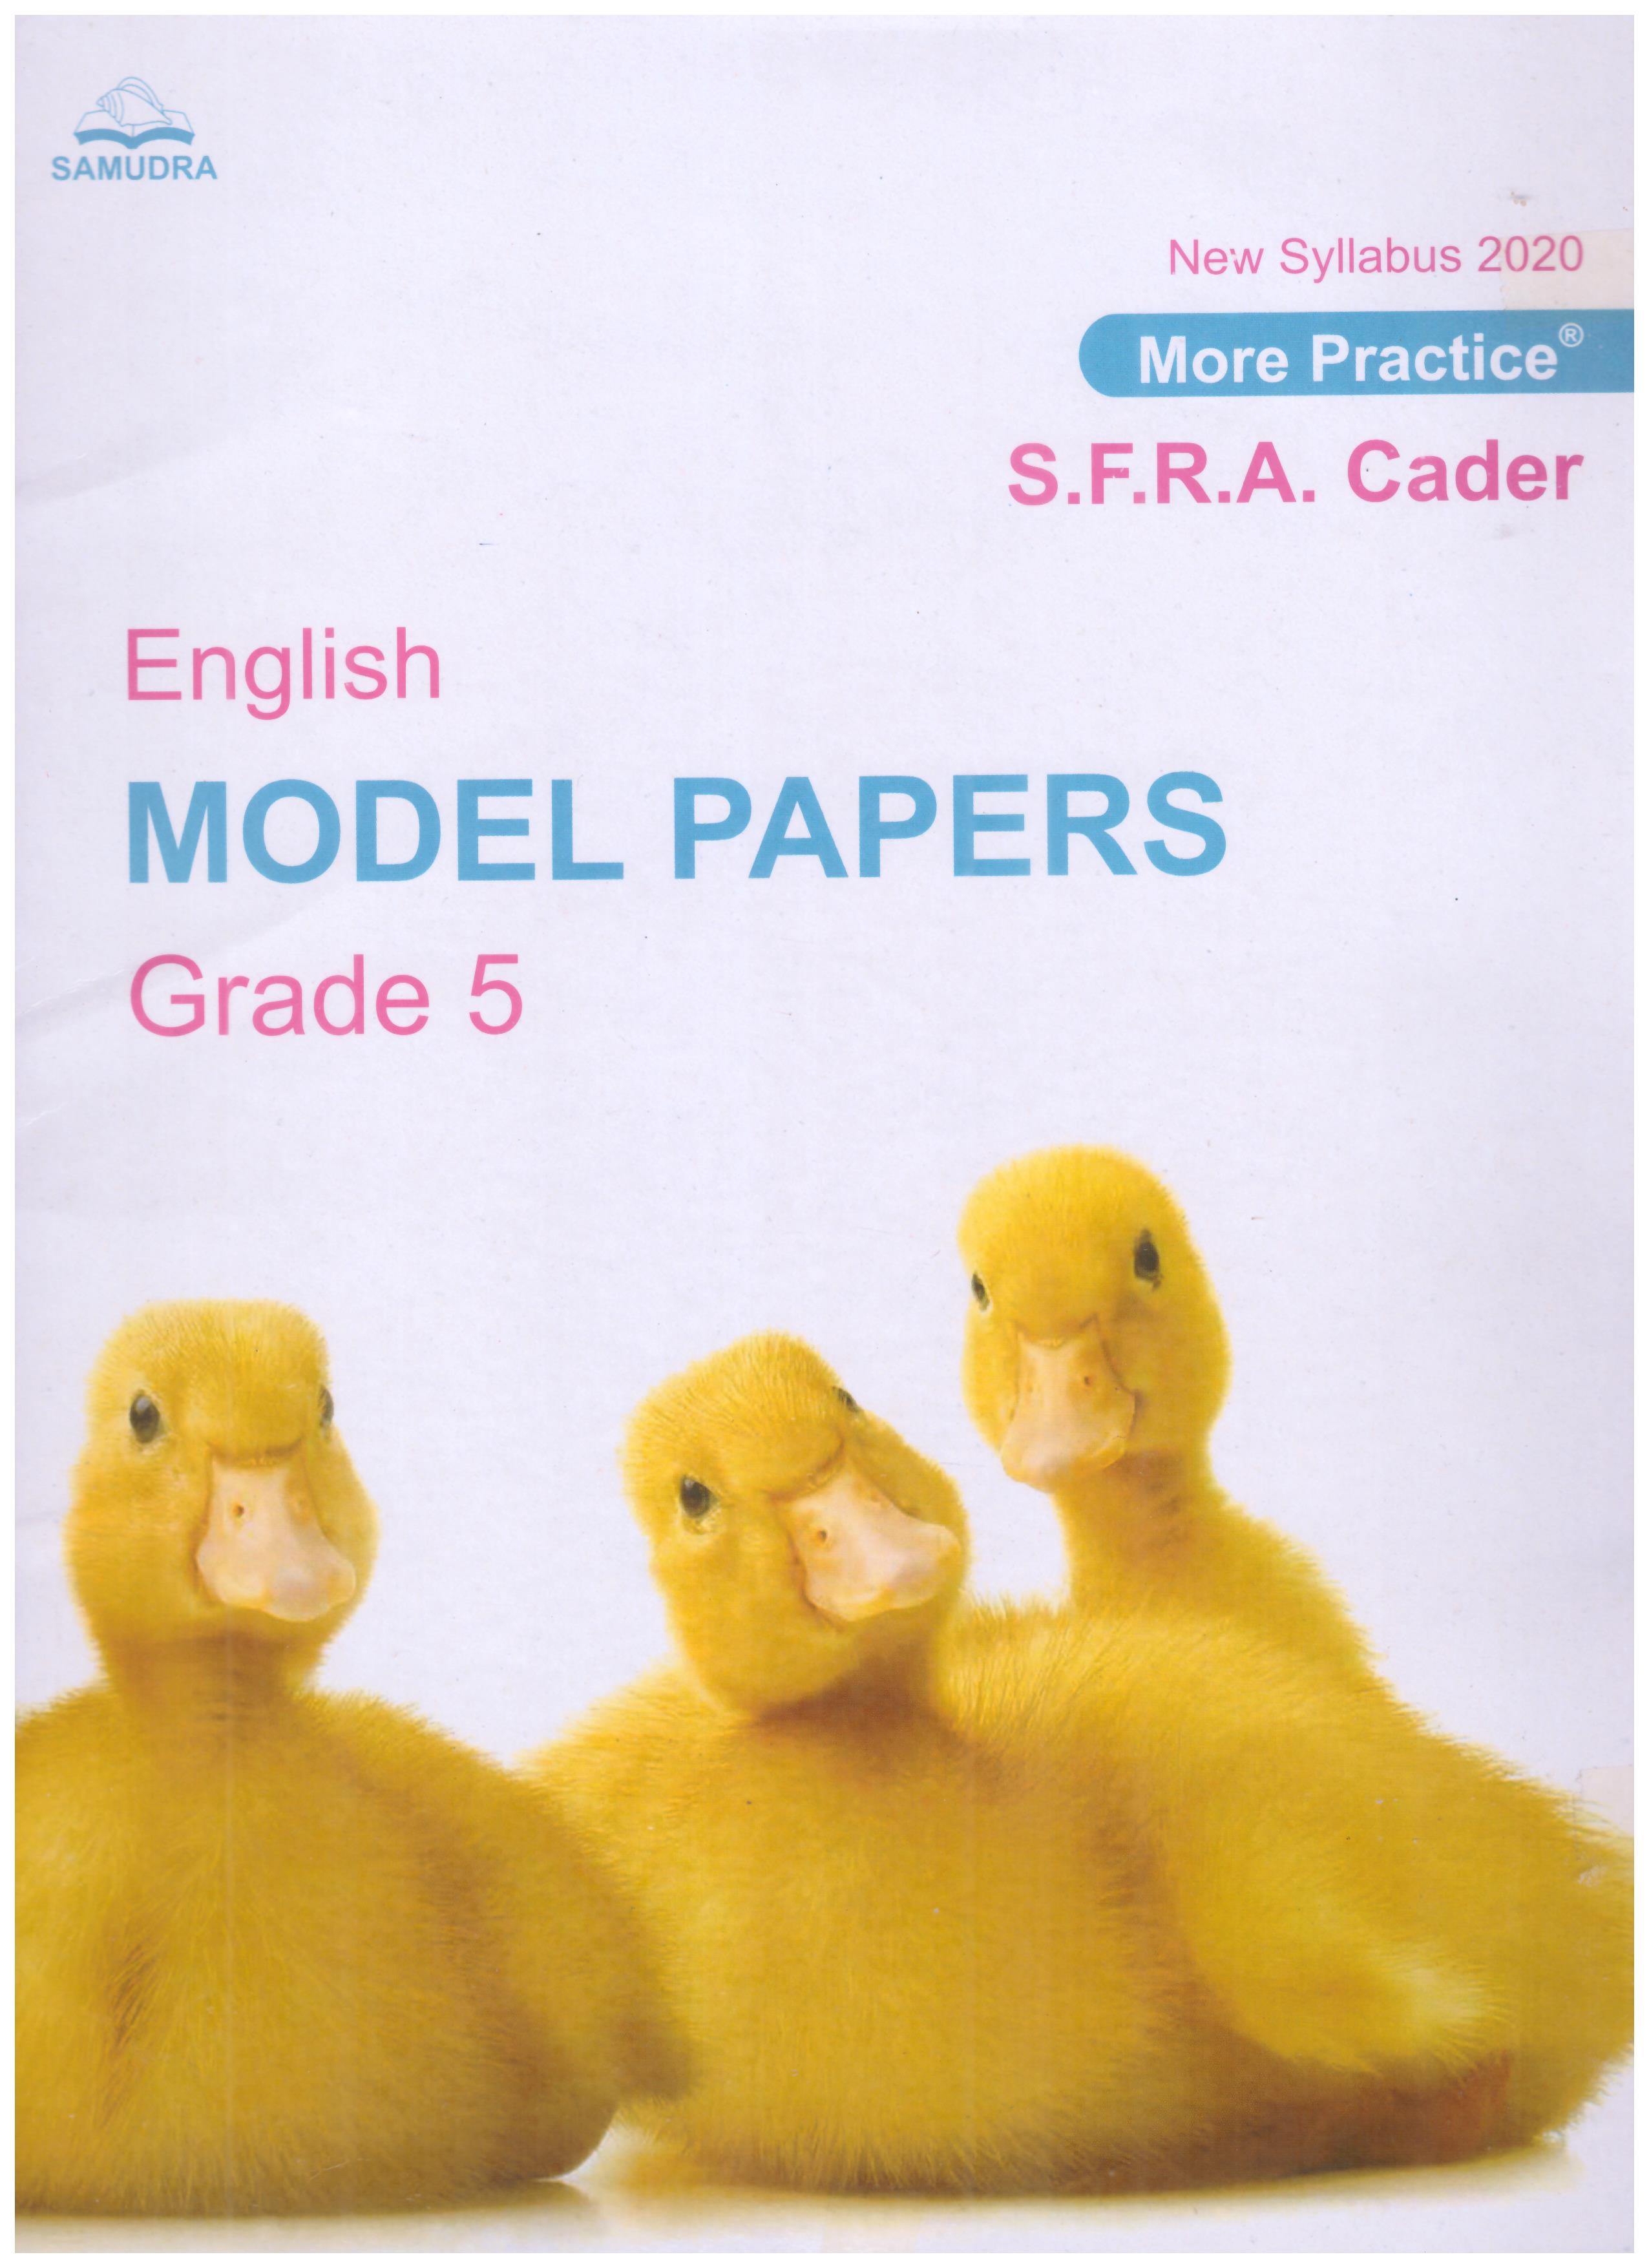 English Model Papers Grade 5 (New Syllabus 2020)